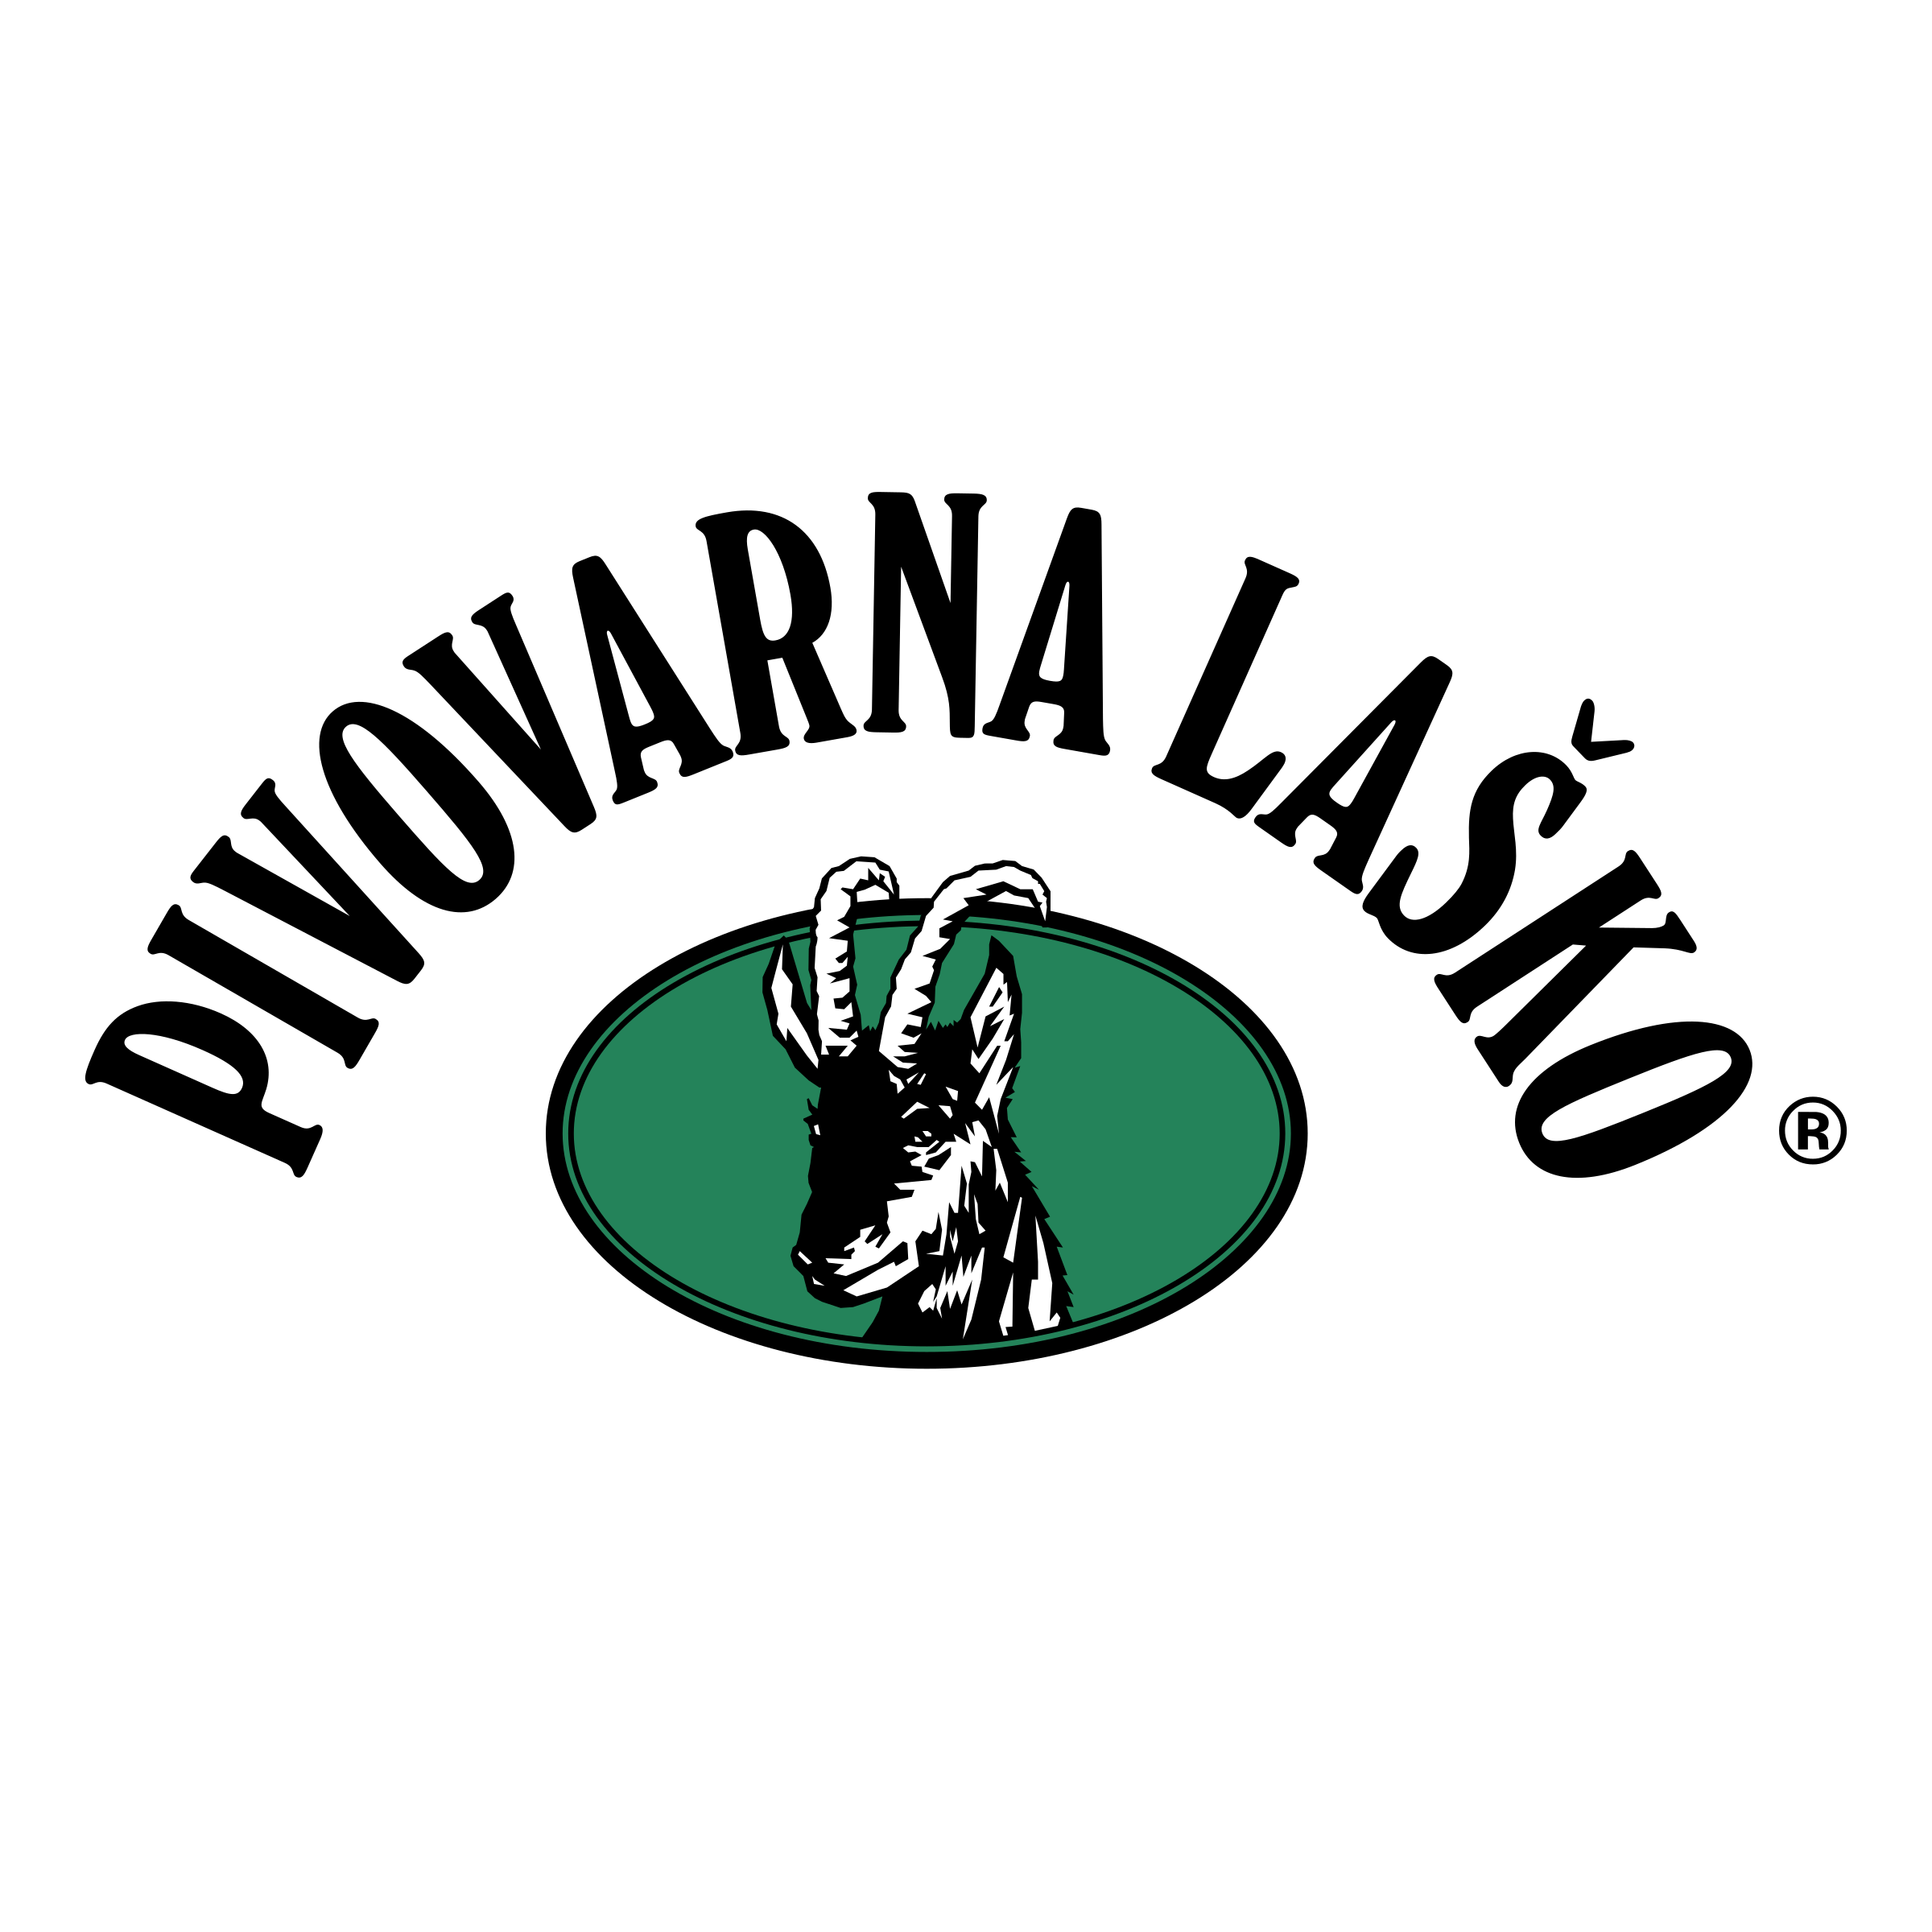 Lasko Logo - Pivovarna Lasko Logo PNG Transparent & SVG Vector - Freebie Supply